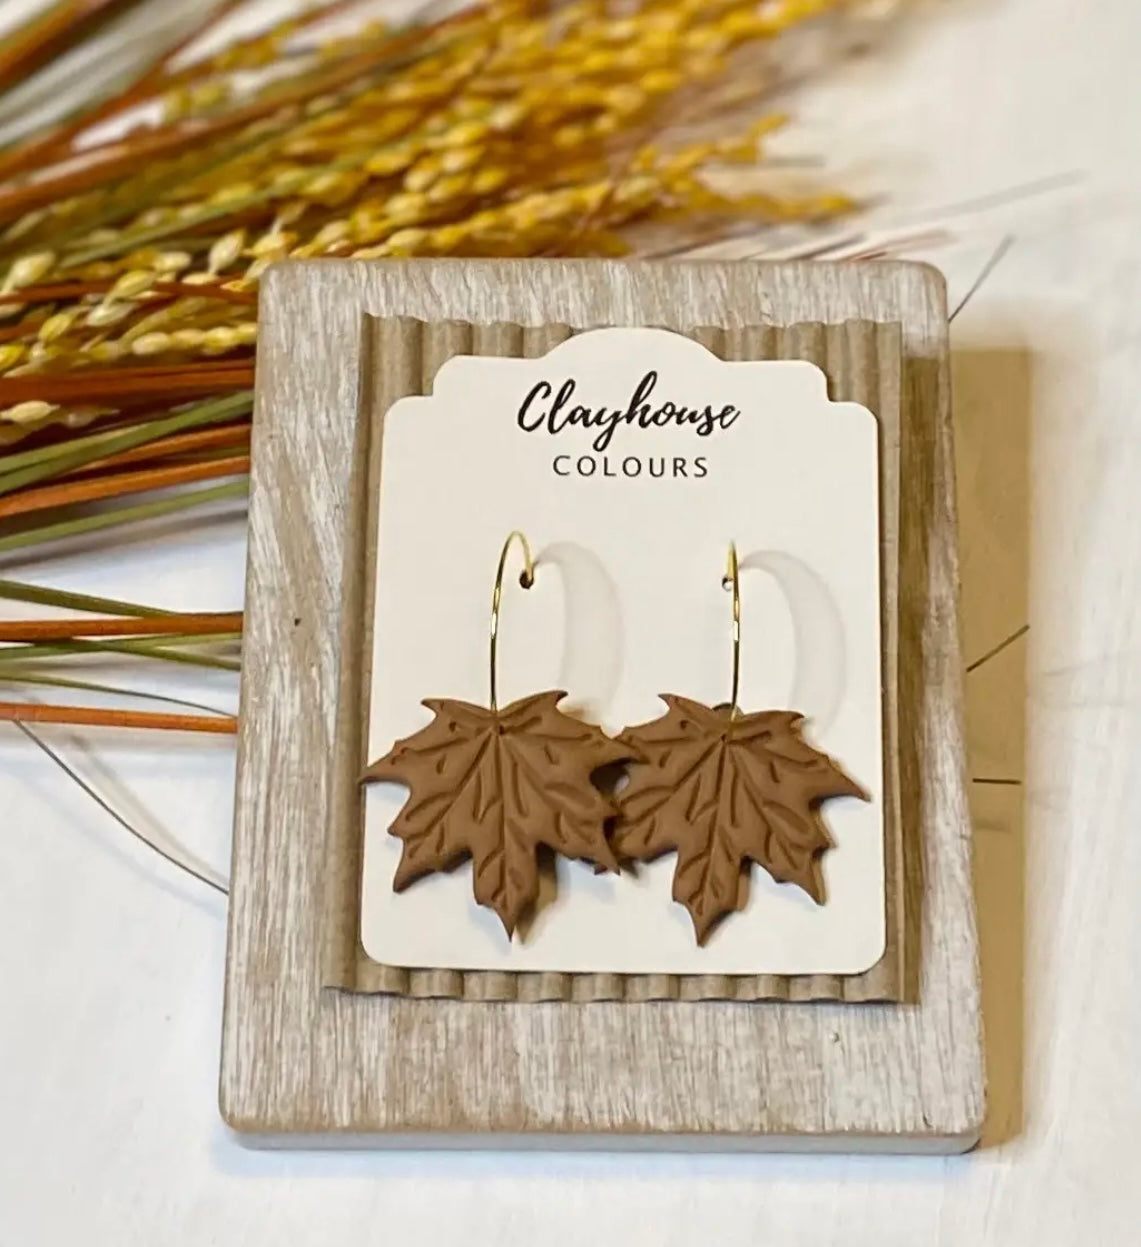 Leaf Clay Earrings